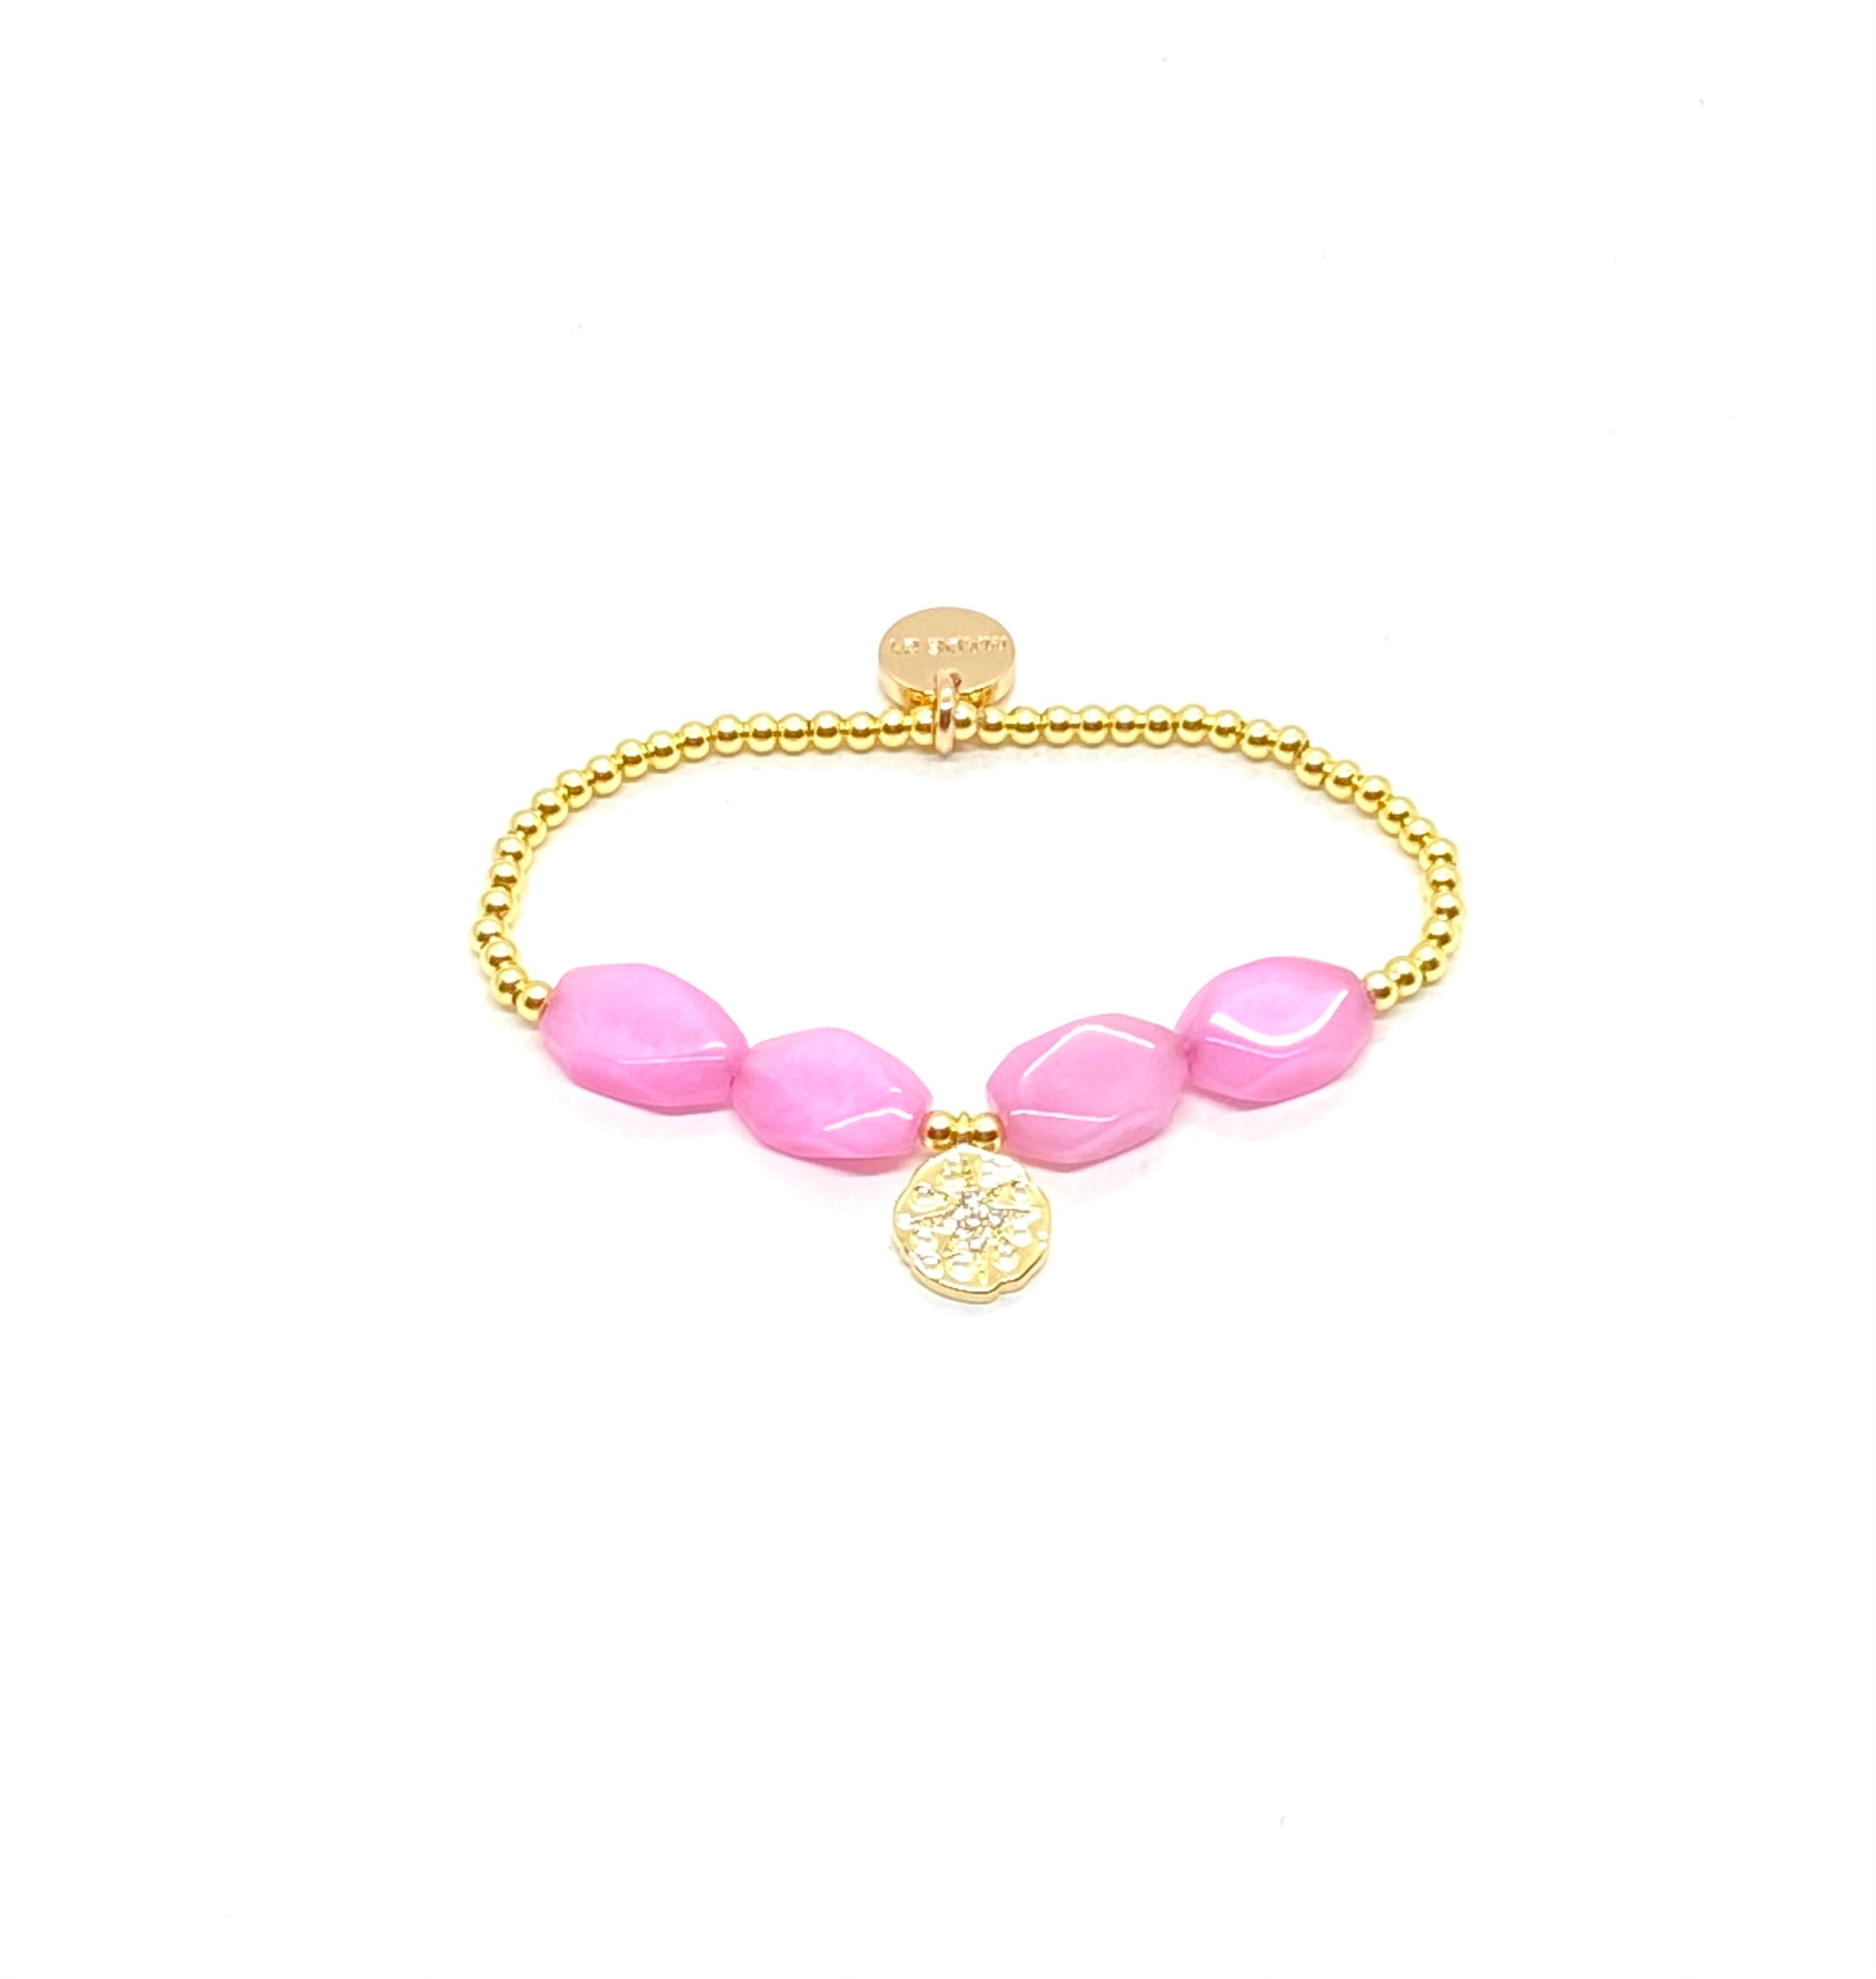 Mimi bracelet